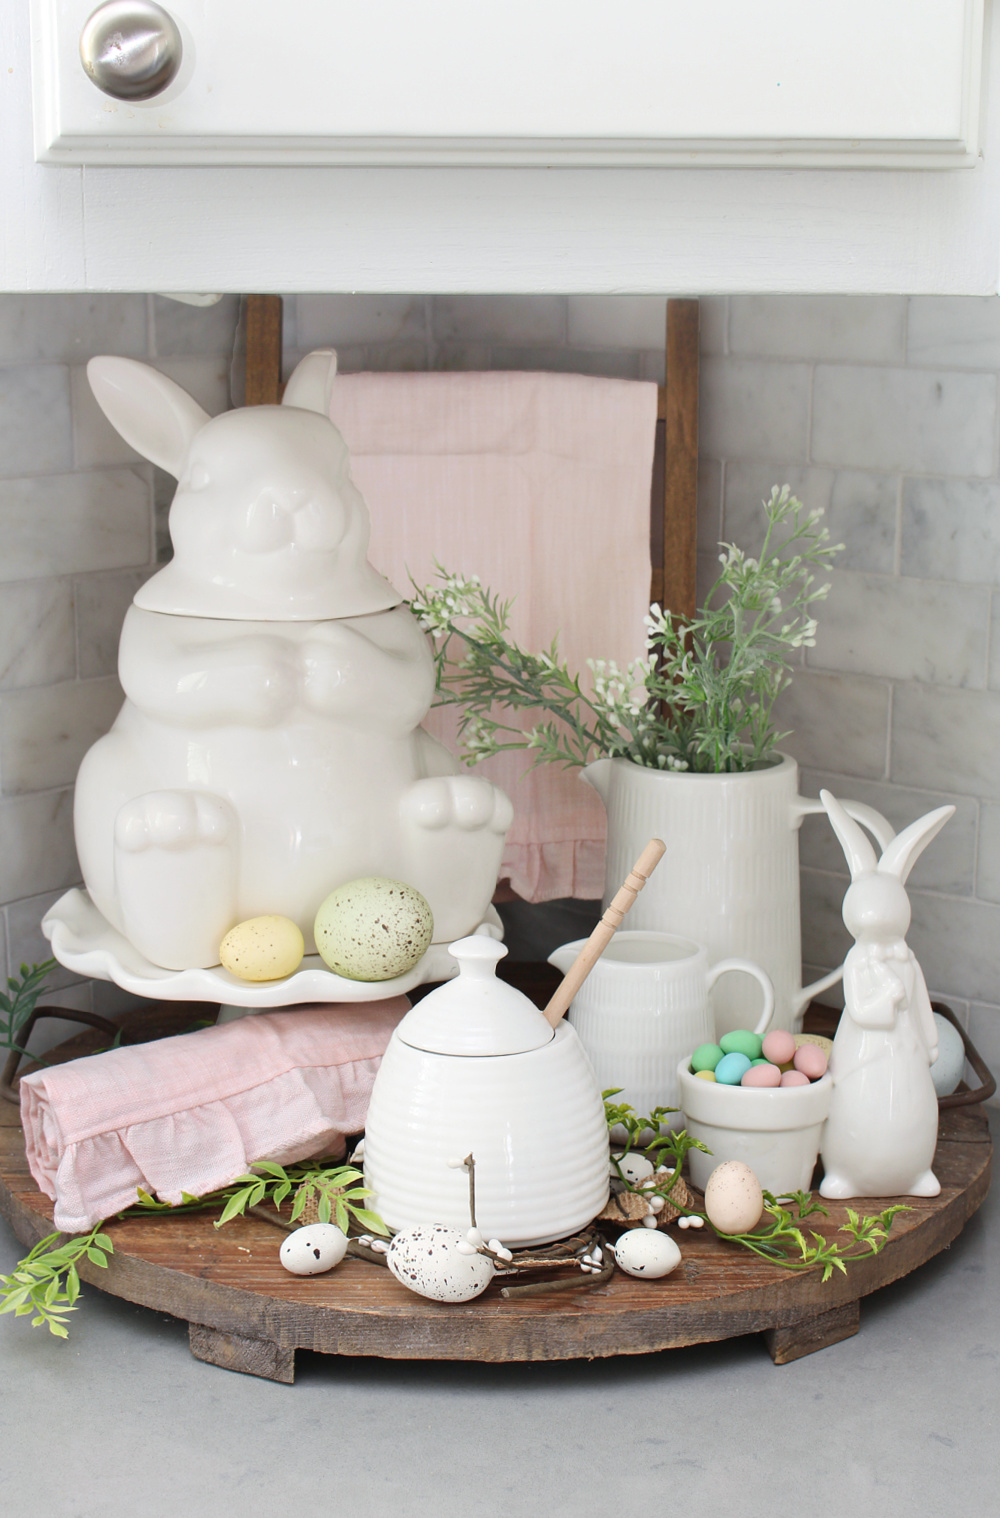 Cute bunny cookie jar vignette in a spring kitchen